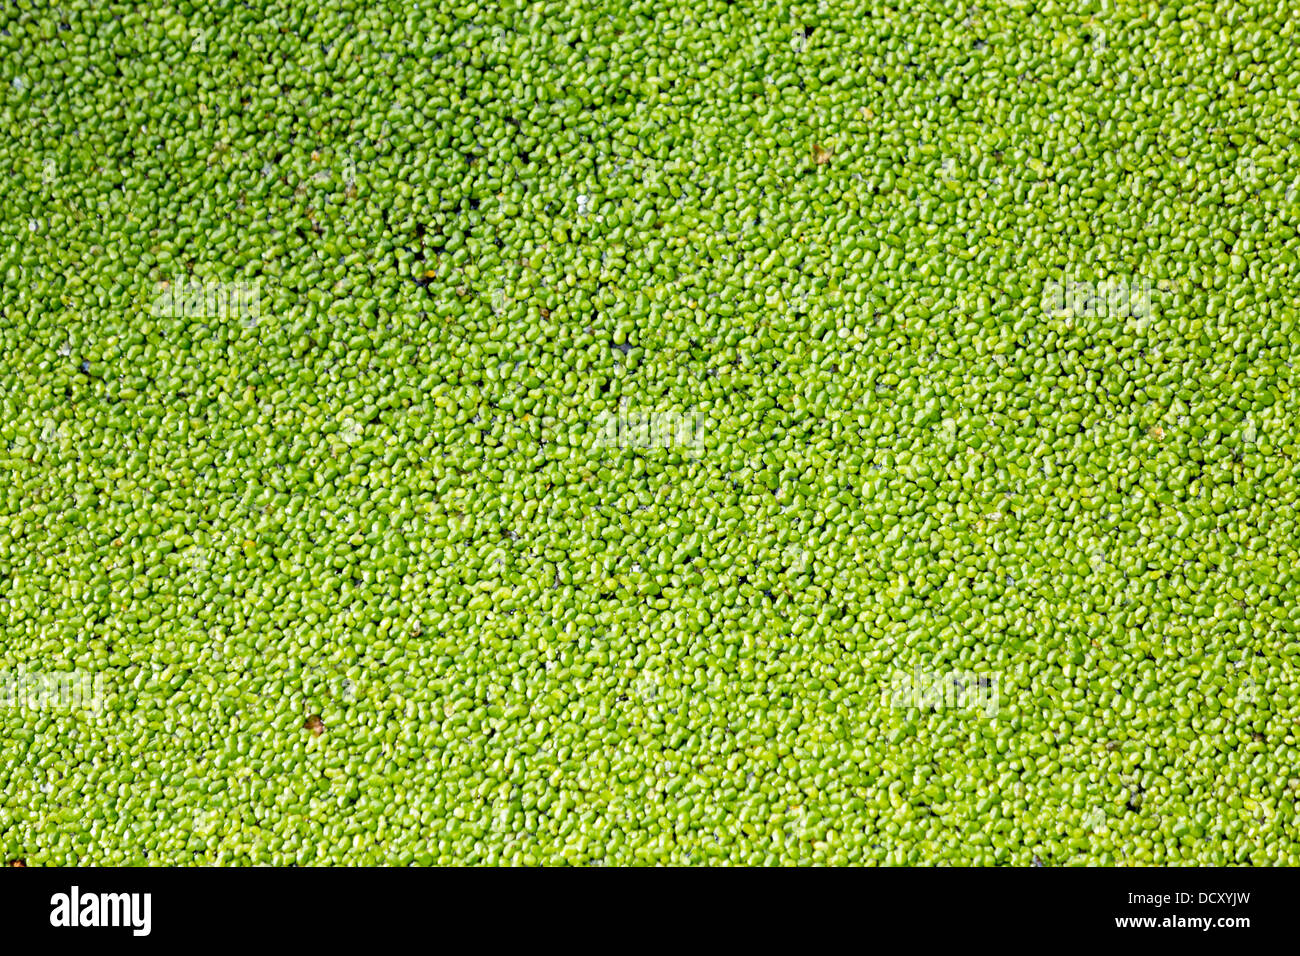 Grünen Rasen - Textur Stockfoto